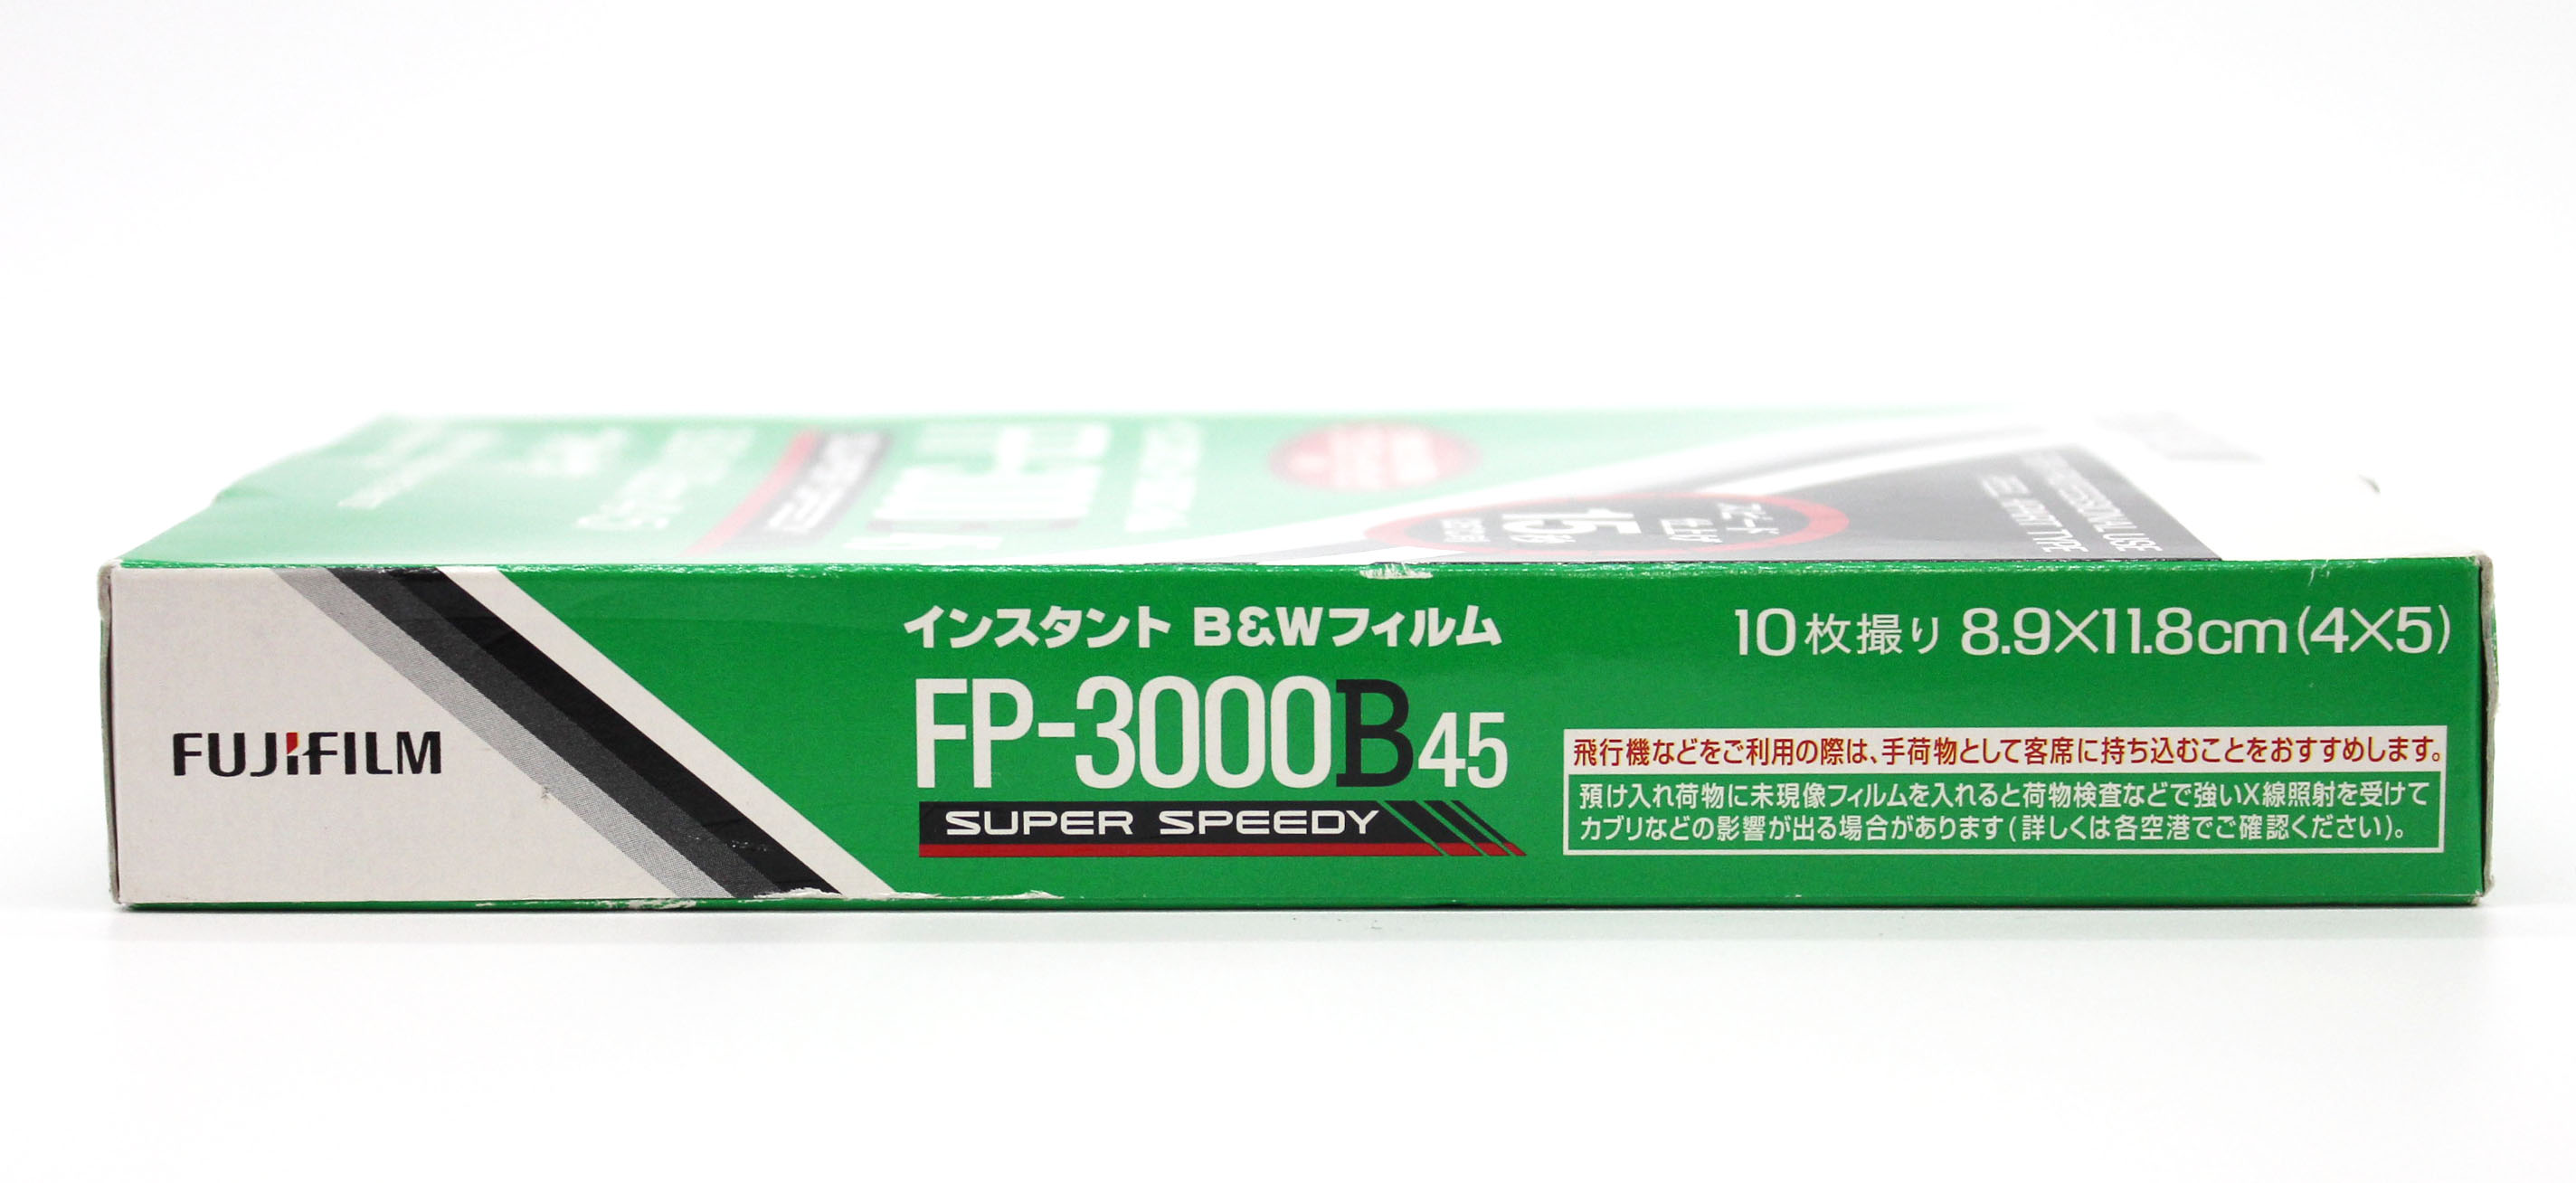  Fuji Fujifilm FP-3000B45 4x5 8.9x11.8cm Instant Black & White Film (EXP 10/2010) from Japan Photo 6